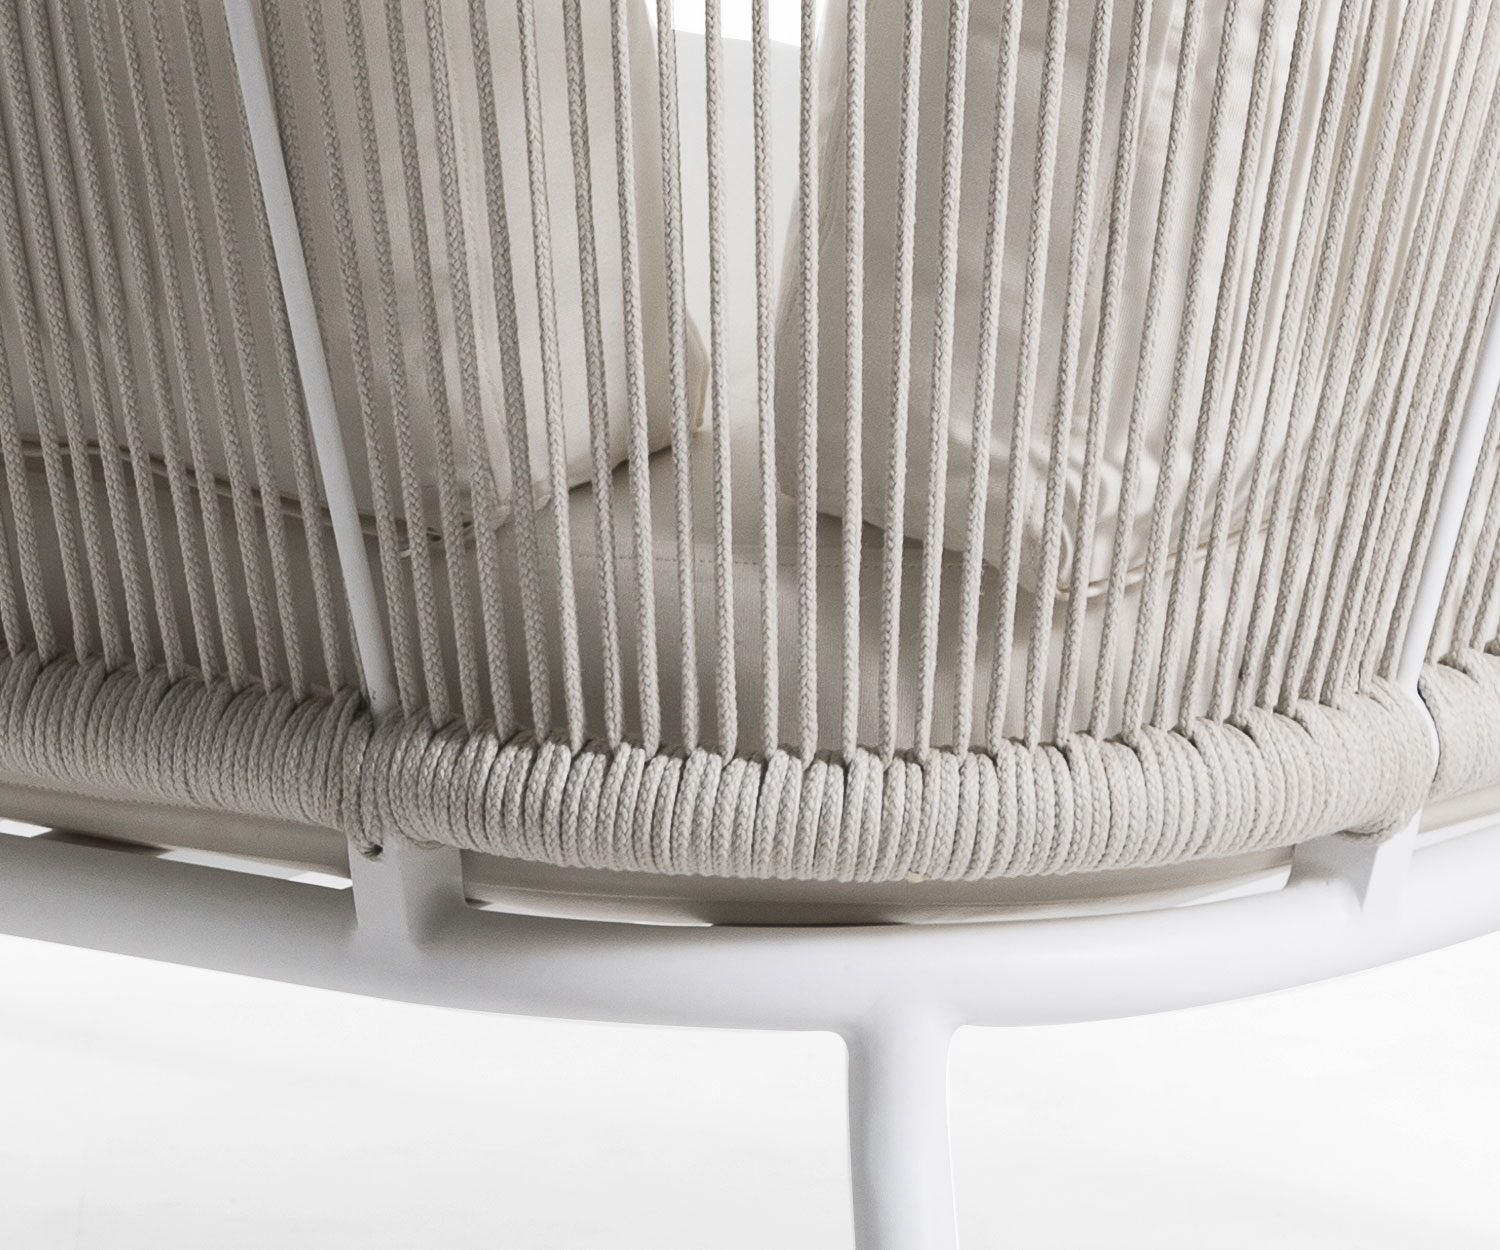 Oasiq Yland Eckbank Design Sofa im Detail Aluminiumgestell und handgewobene Polsterung